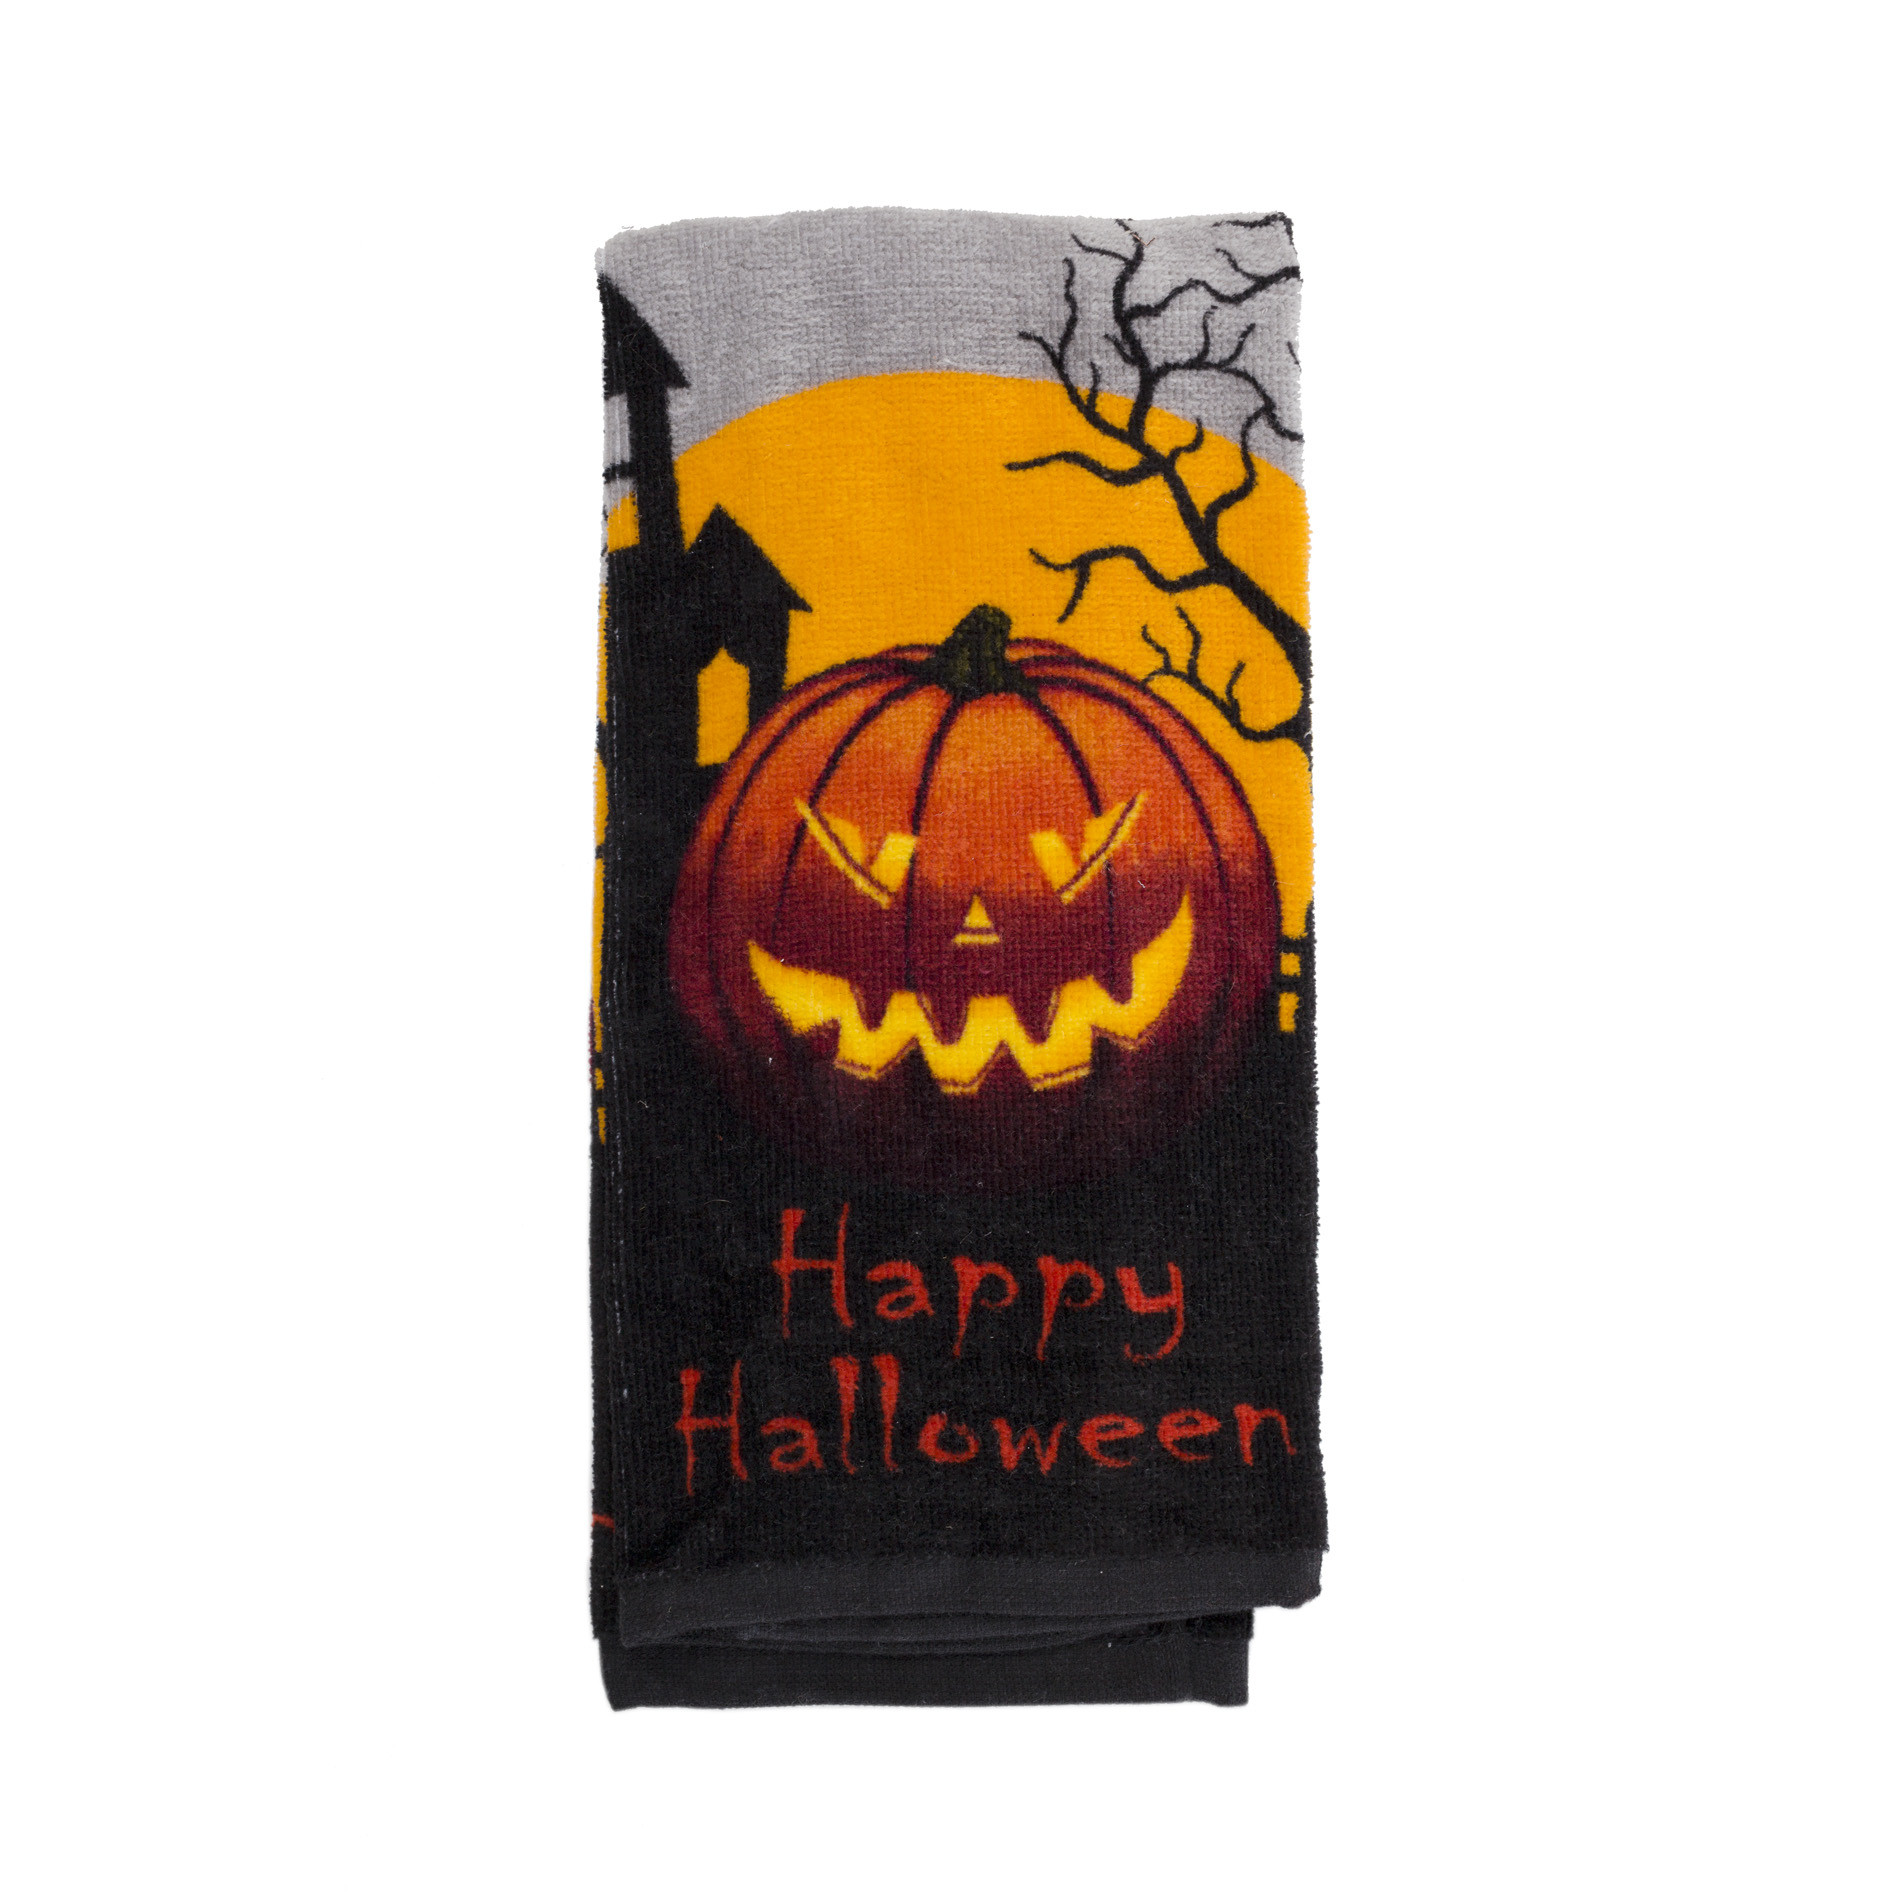 Halloween Kitchen Towels
 Totally Ghoul Jack O Lantern 25" x 15" Halloween Kitchen